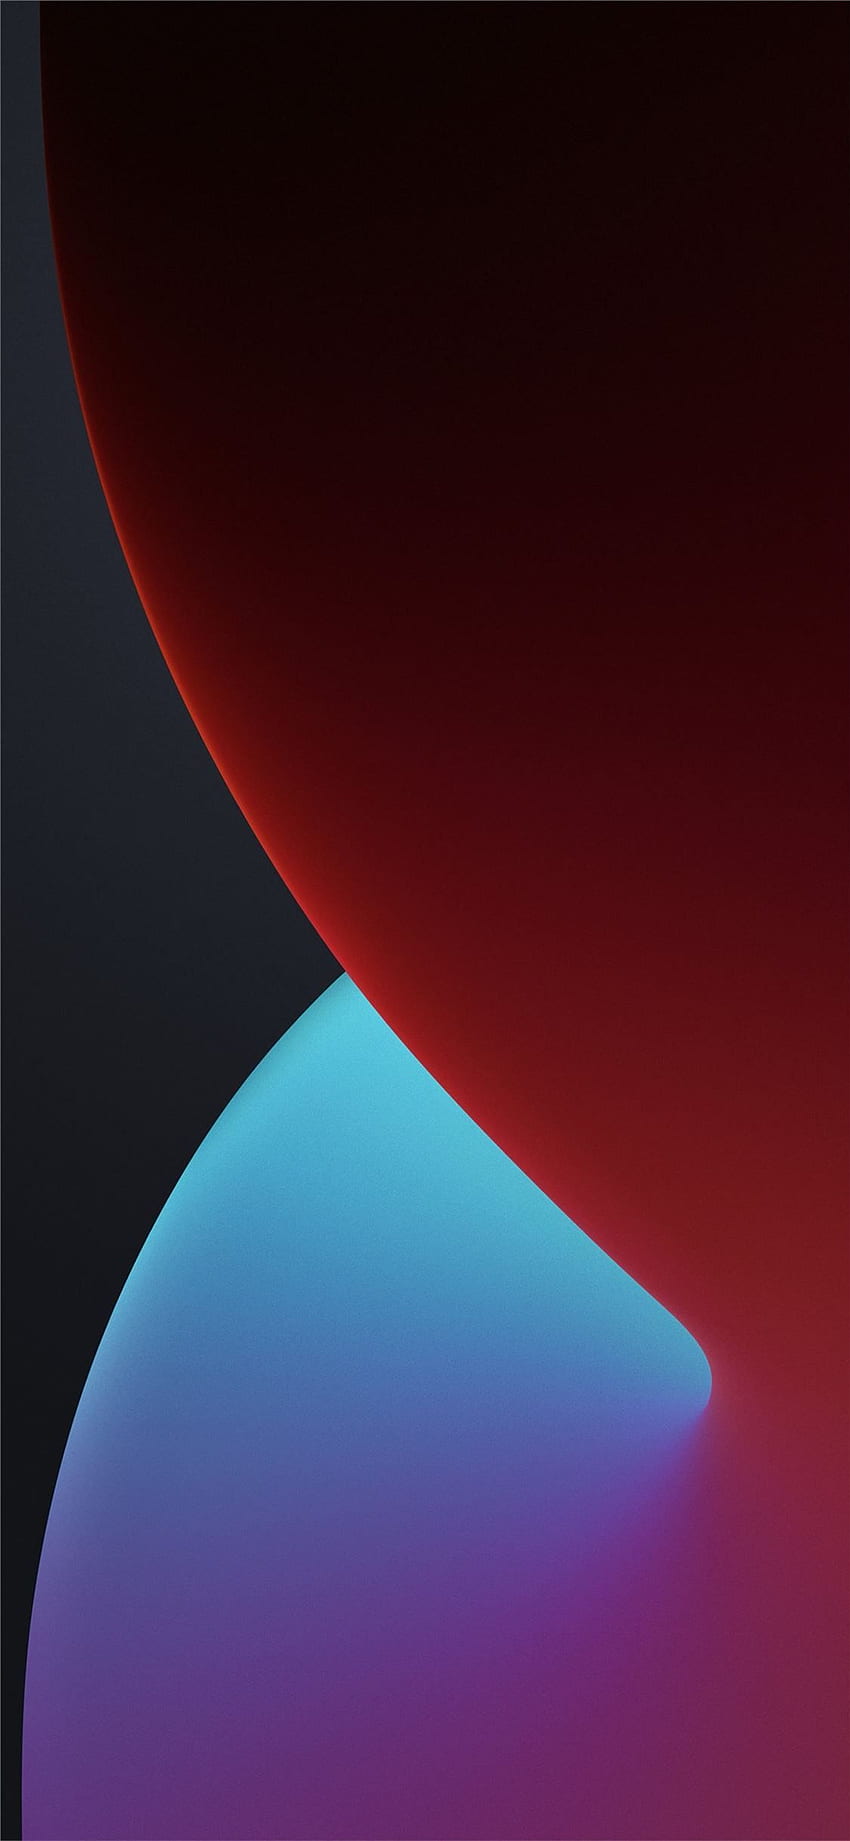 iPhone SE Wallpaper 4K, Stock, iOS 14, Red, Light, 2020